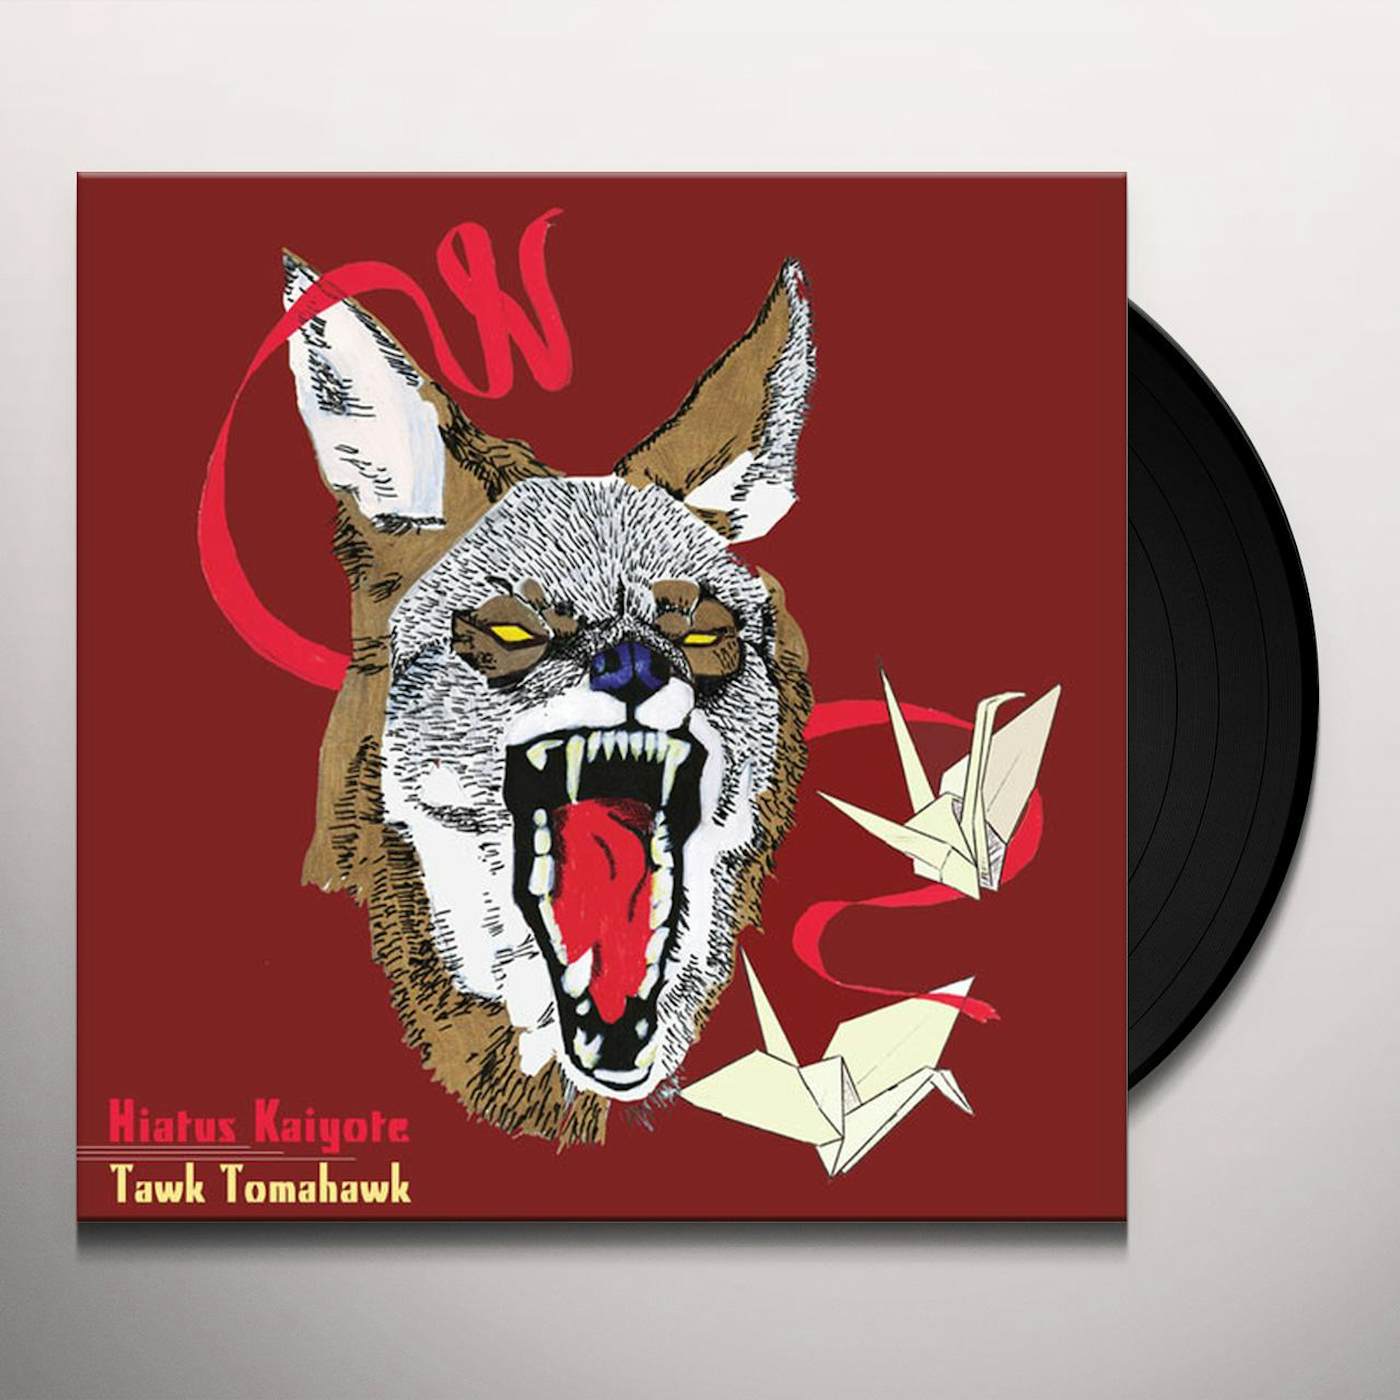 Hiatus Kaiyote Tawk Tomahawk Vinyl Record